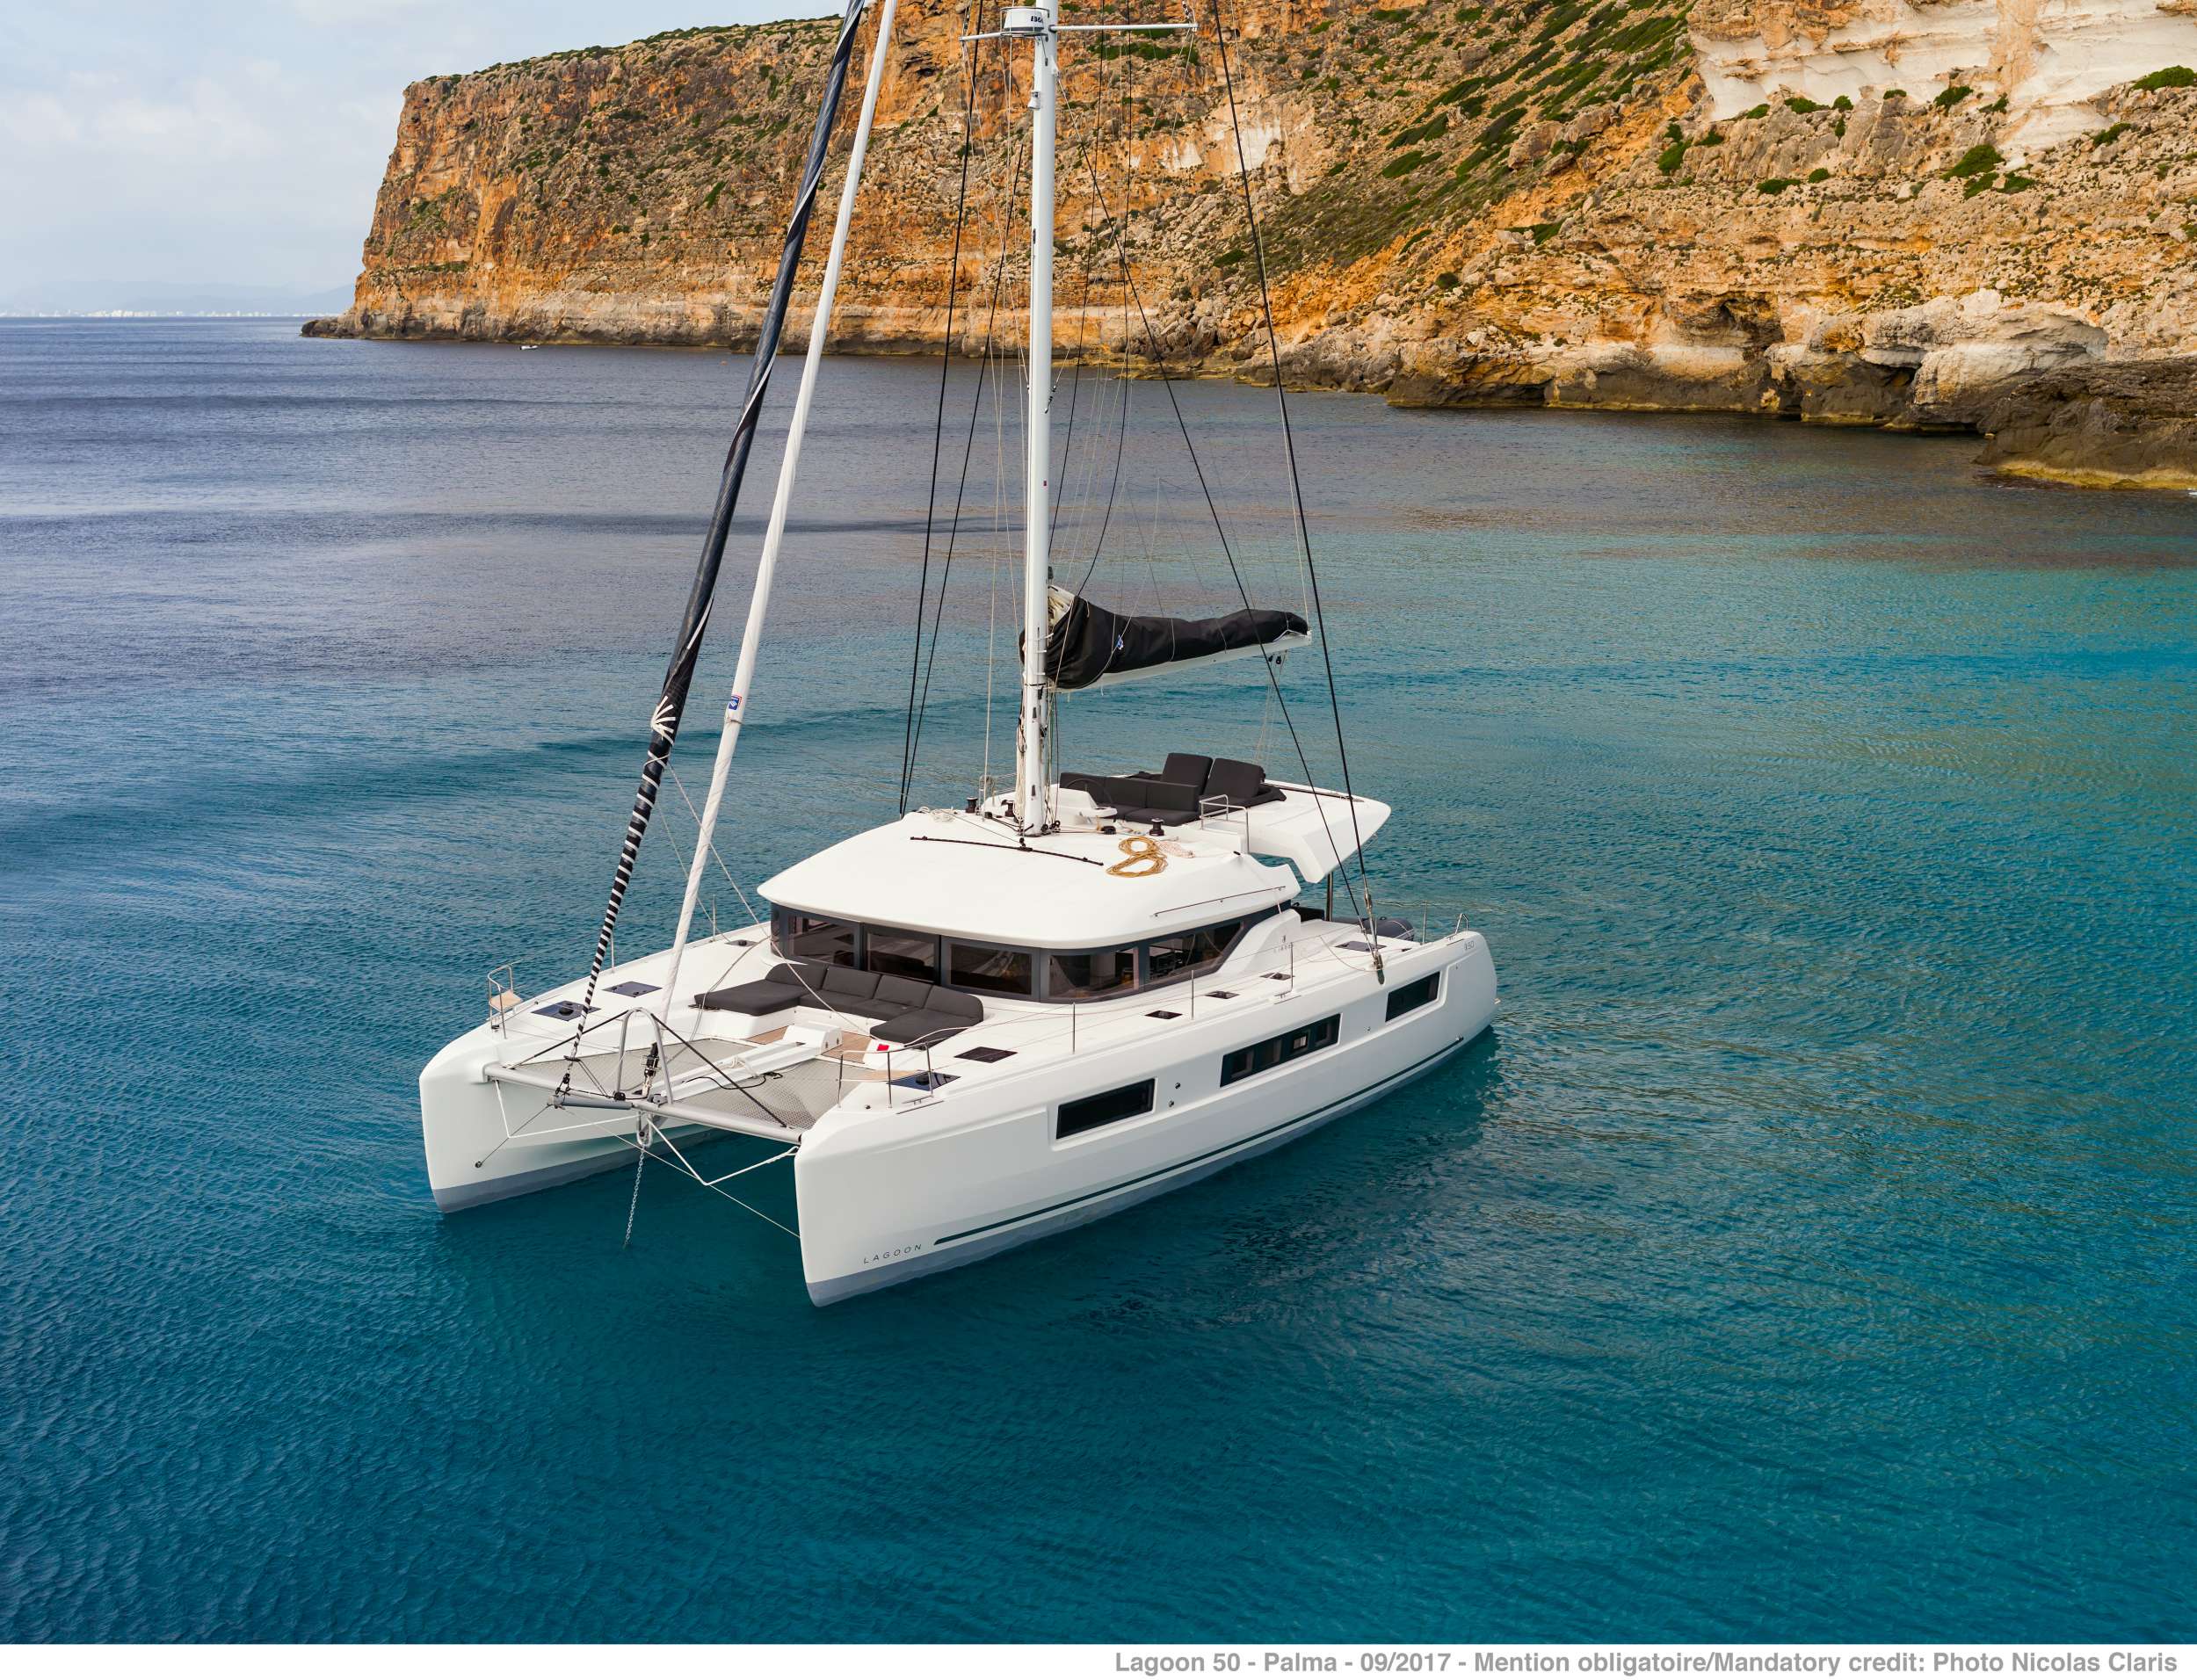 ONEIDA 2 - Yacht Charter Naxos & Boat hire in Greece 1